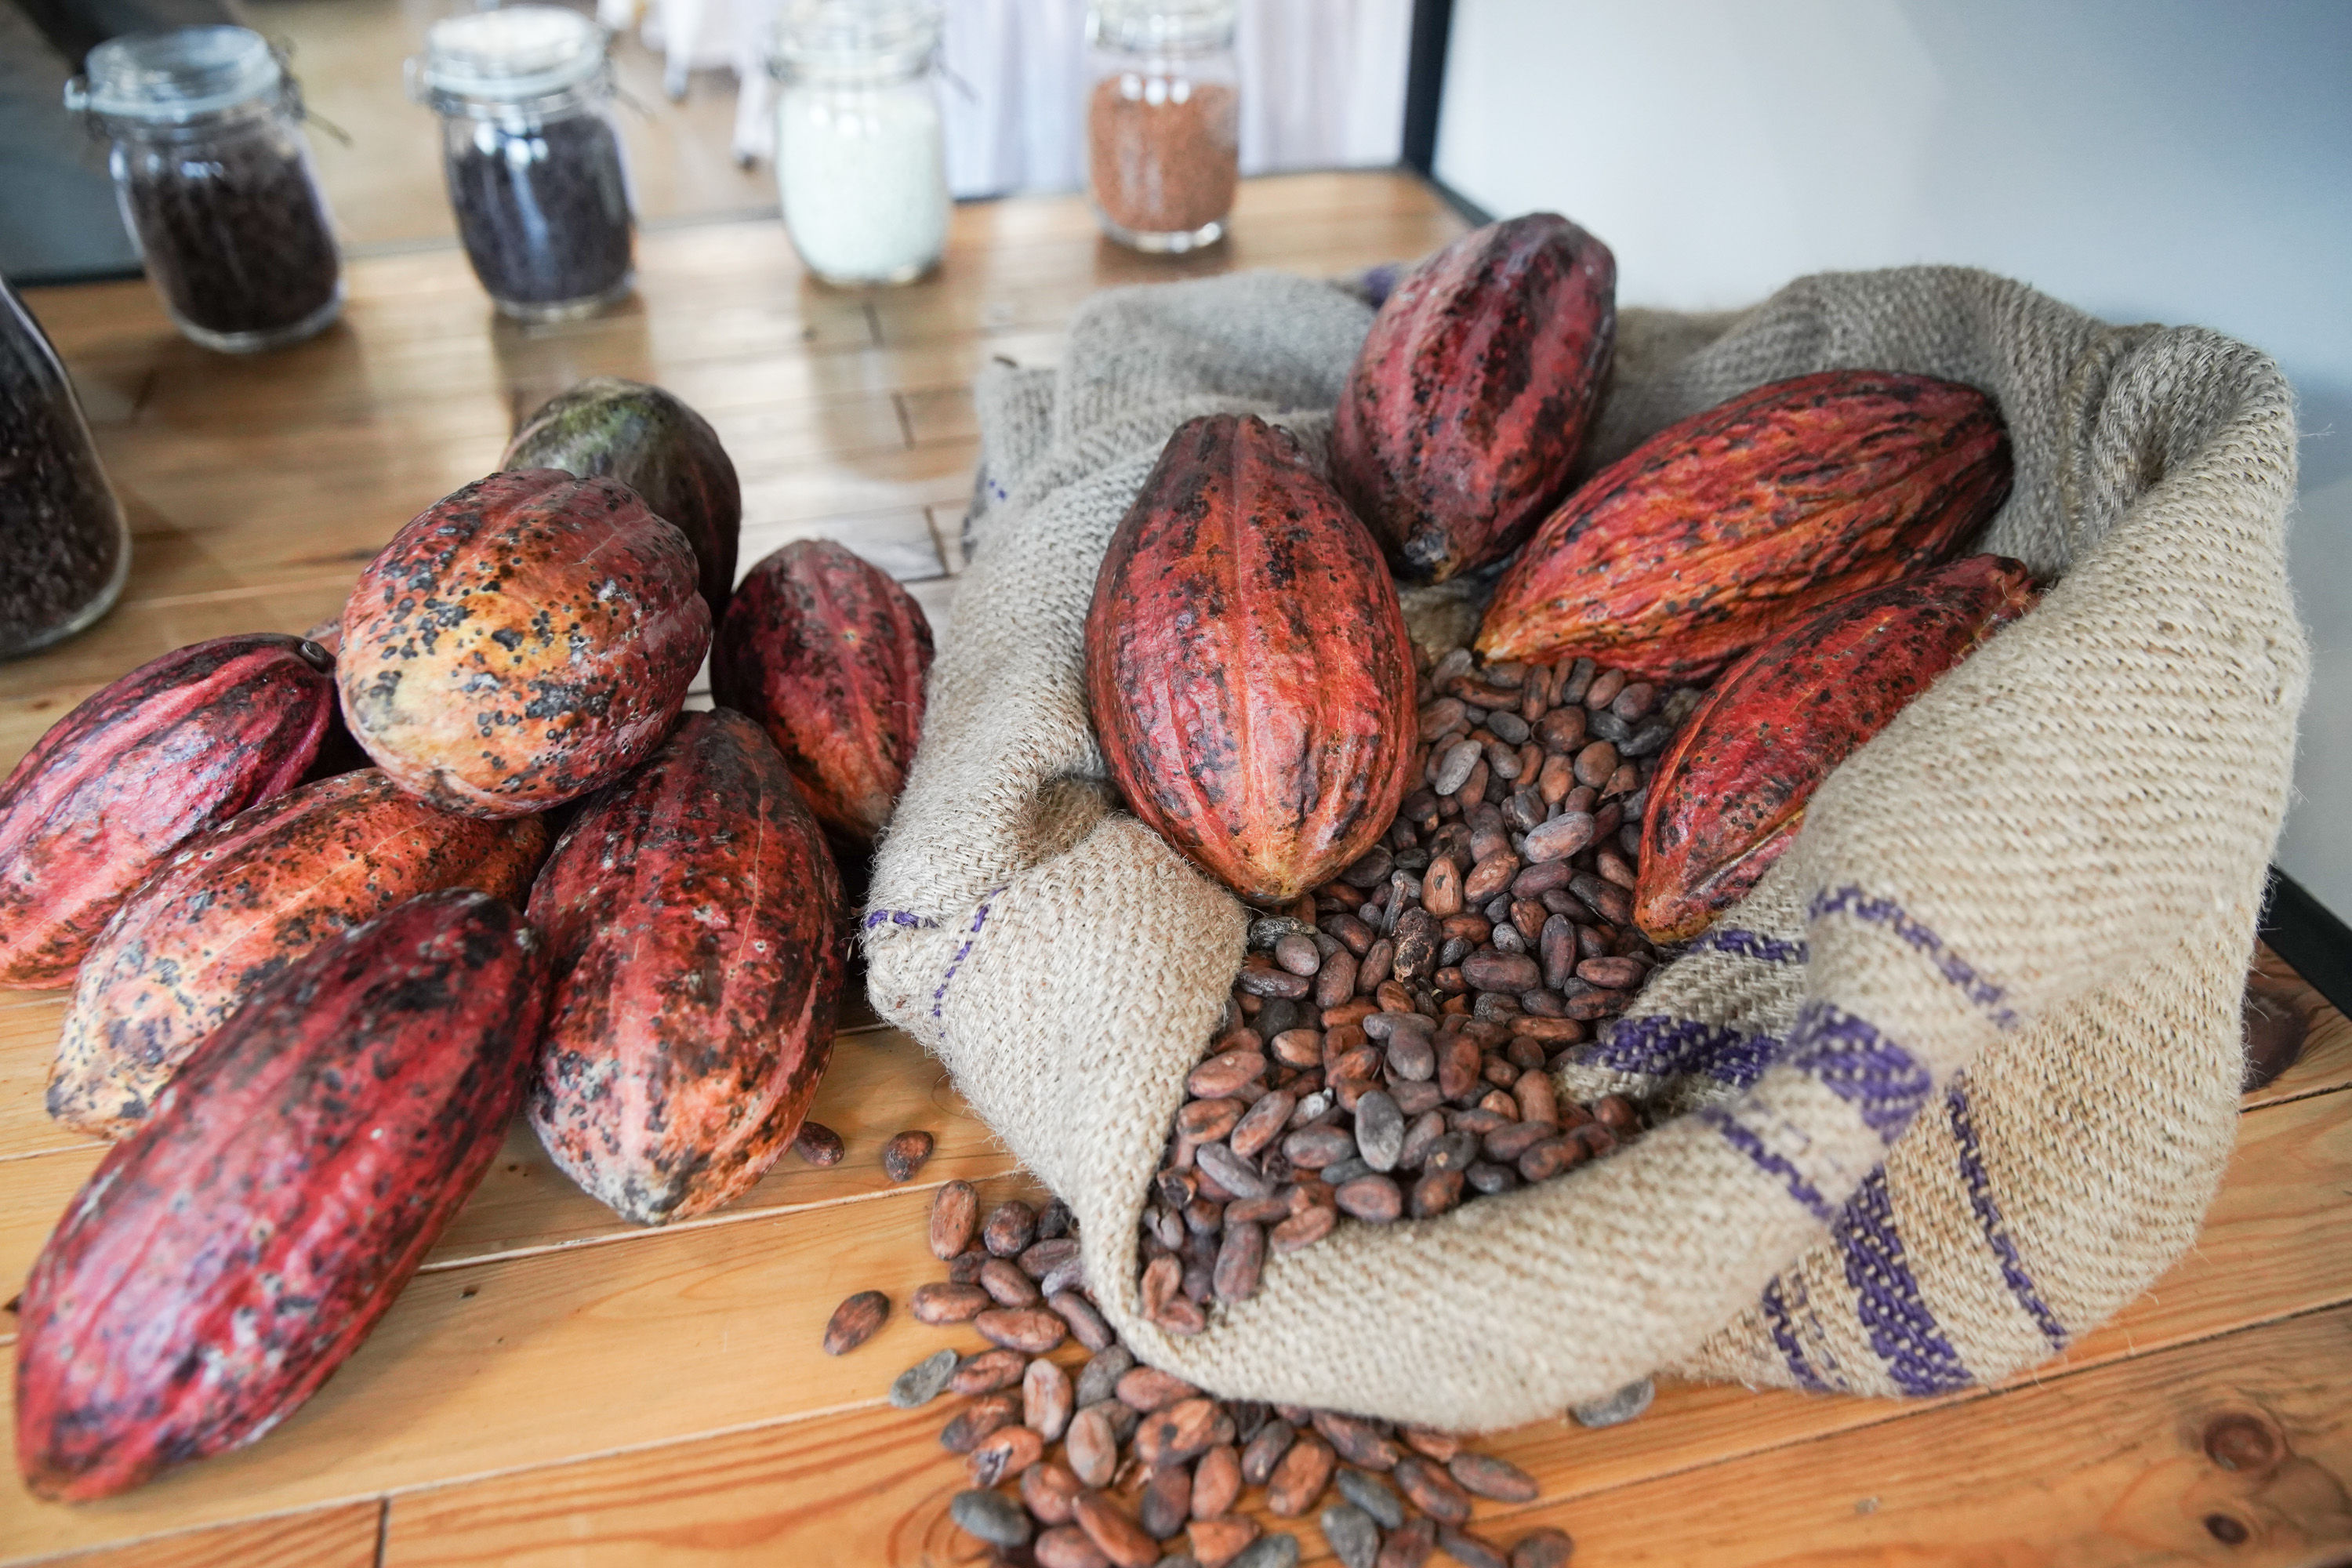 Tampak buah kakao di Barry Callebaut Chocolate Studio, di Bandung, Jawa Barat, Kamis, 15 September 2022. Foto: Ismail Pohan/TrenAsia